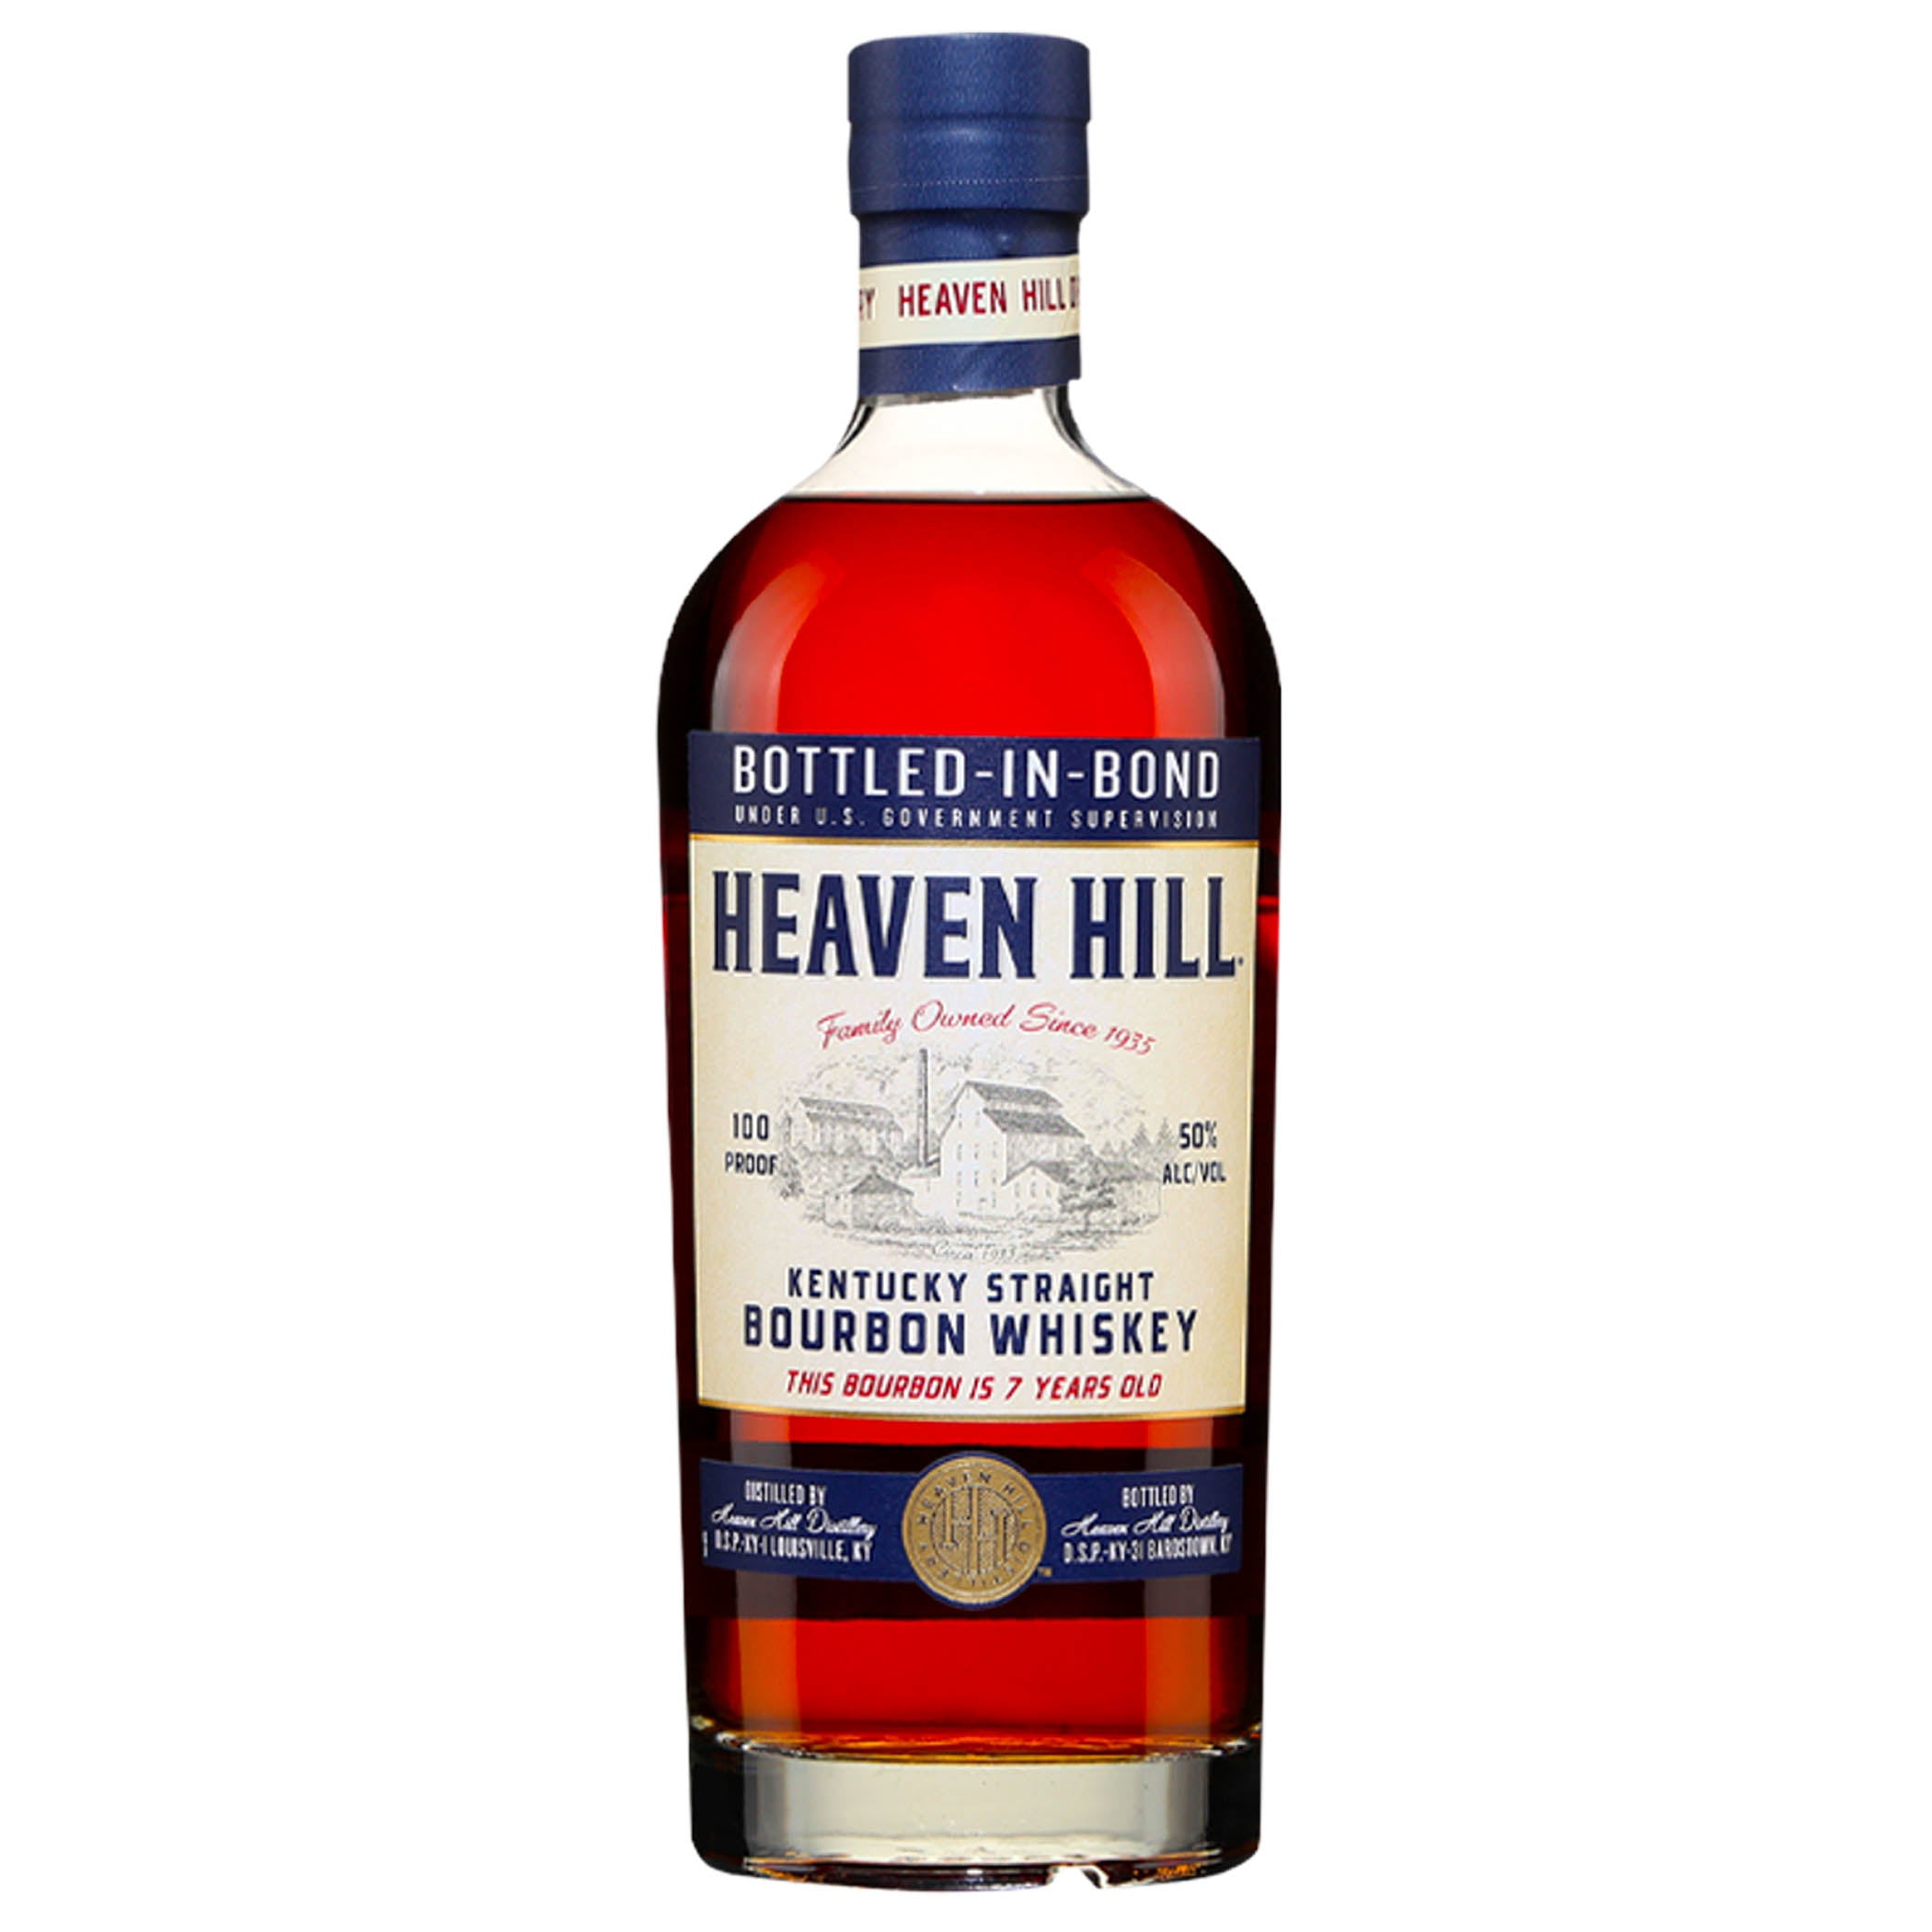 Heaven Hill Bottled-in-Bond 7 Year Old Bourbon